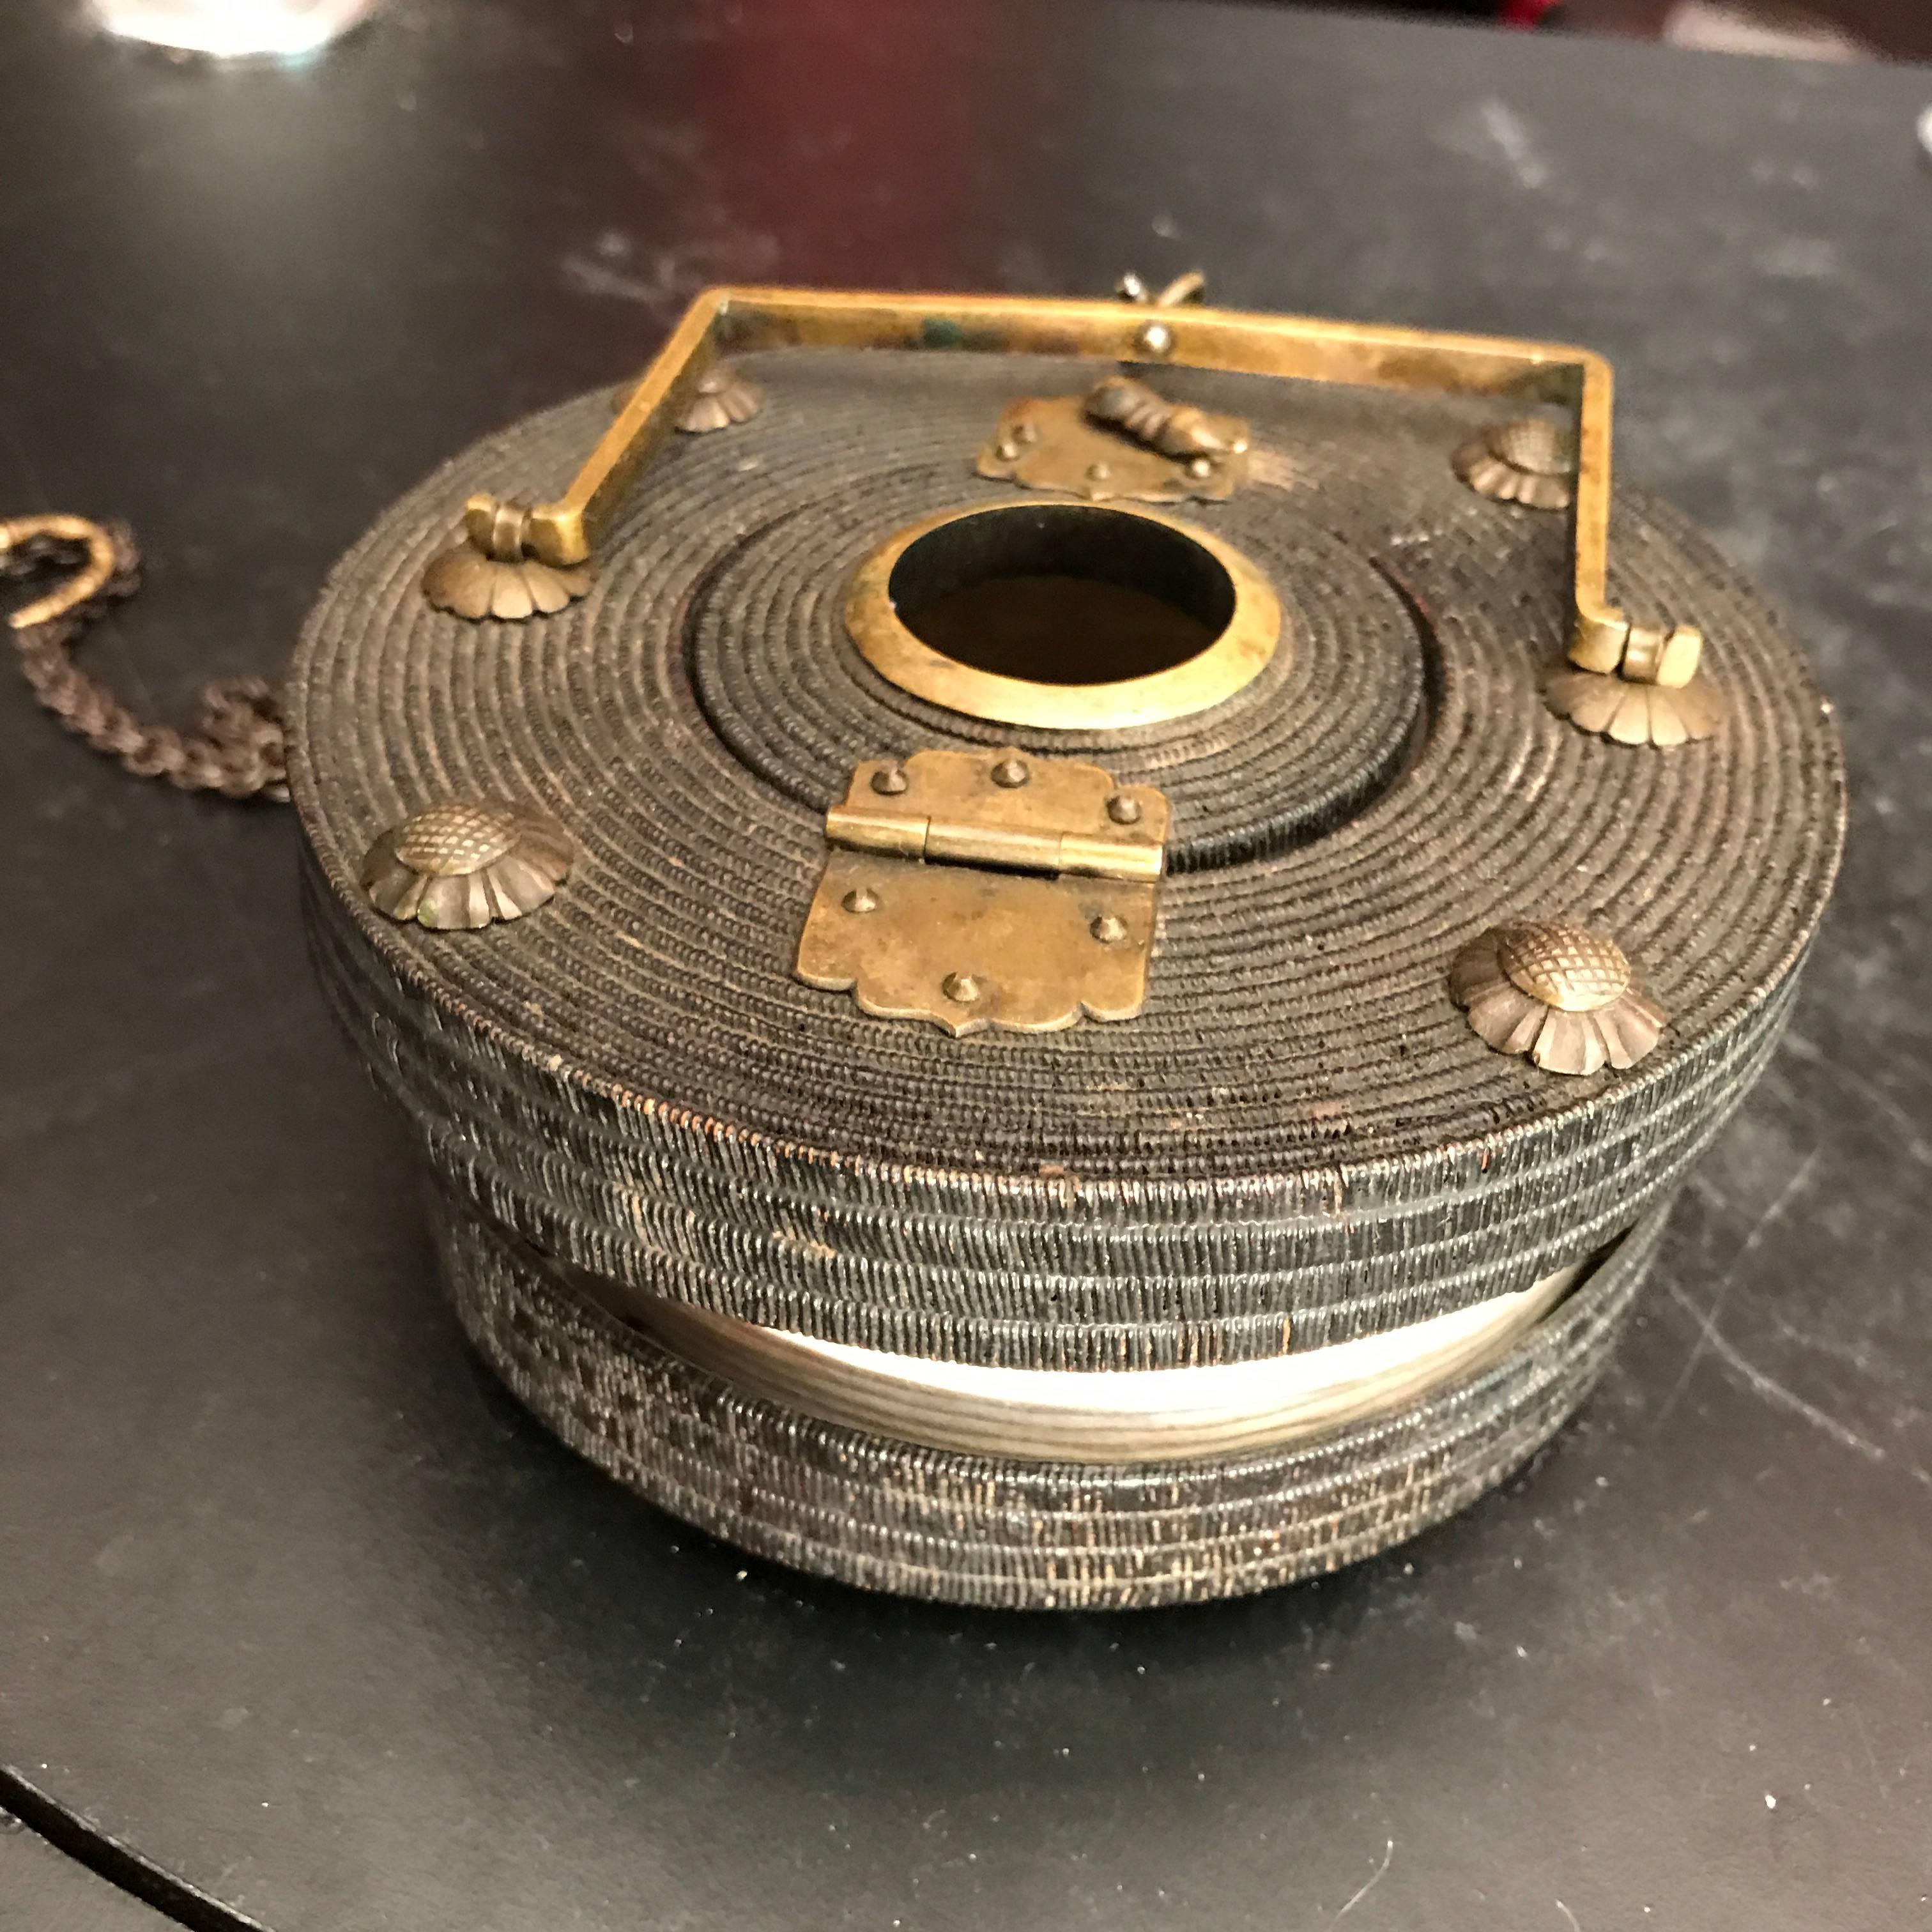 Japanese Japan Antique Portable Lantern Chochin, Rare Survivor, 19th Century